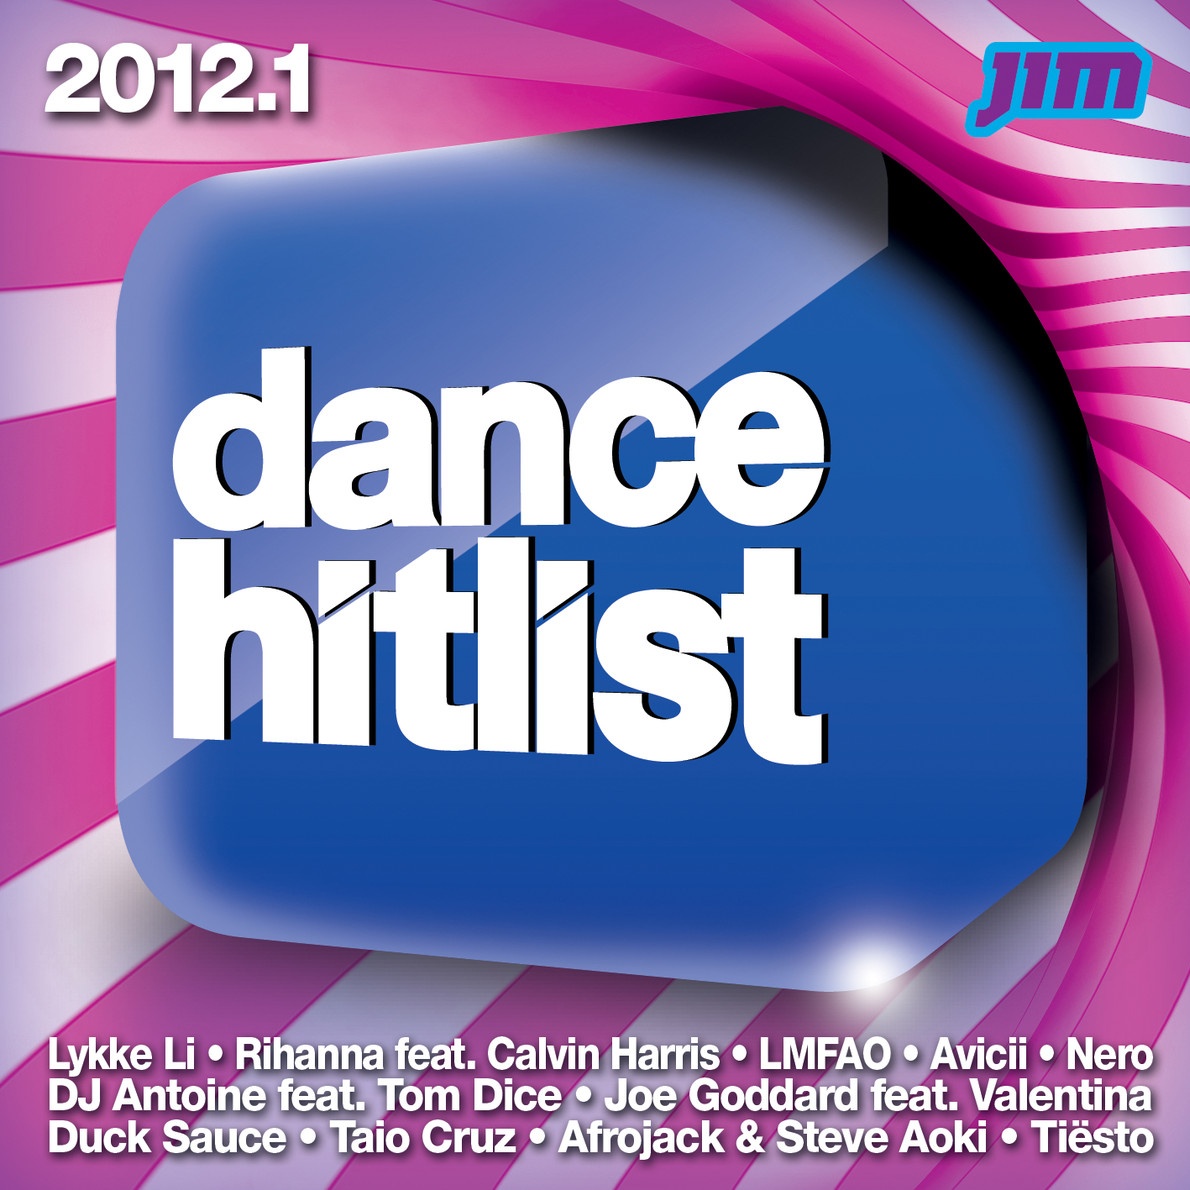 Dance hitlist 2012.1